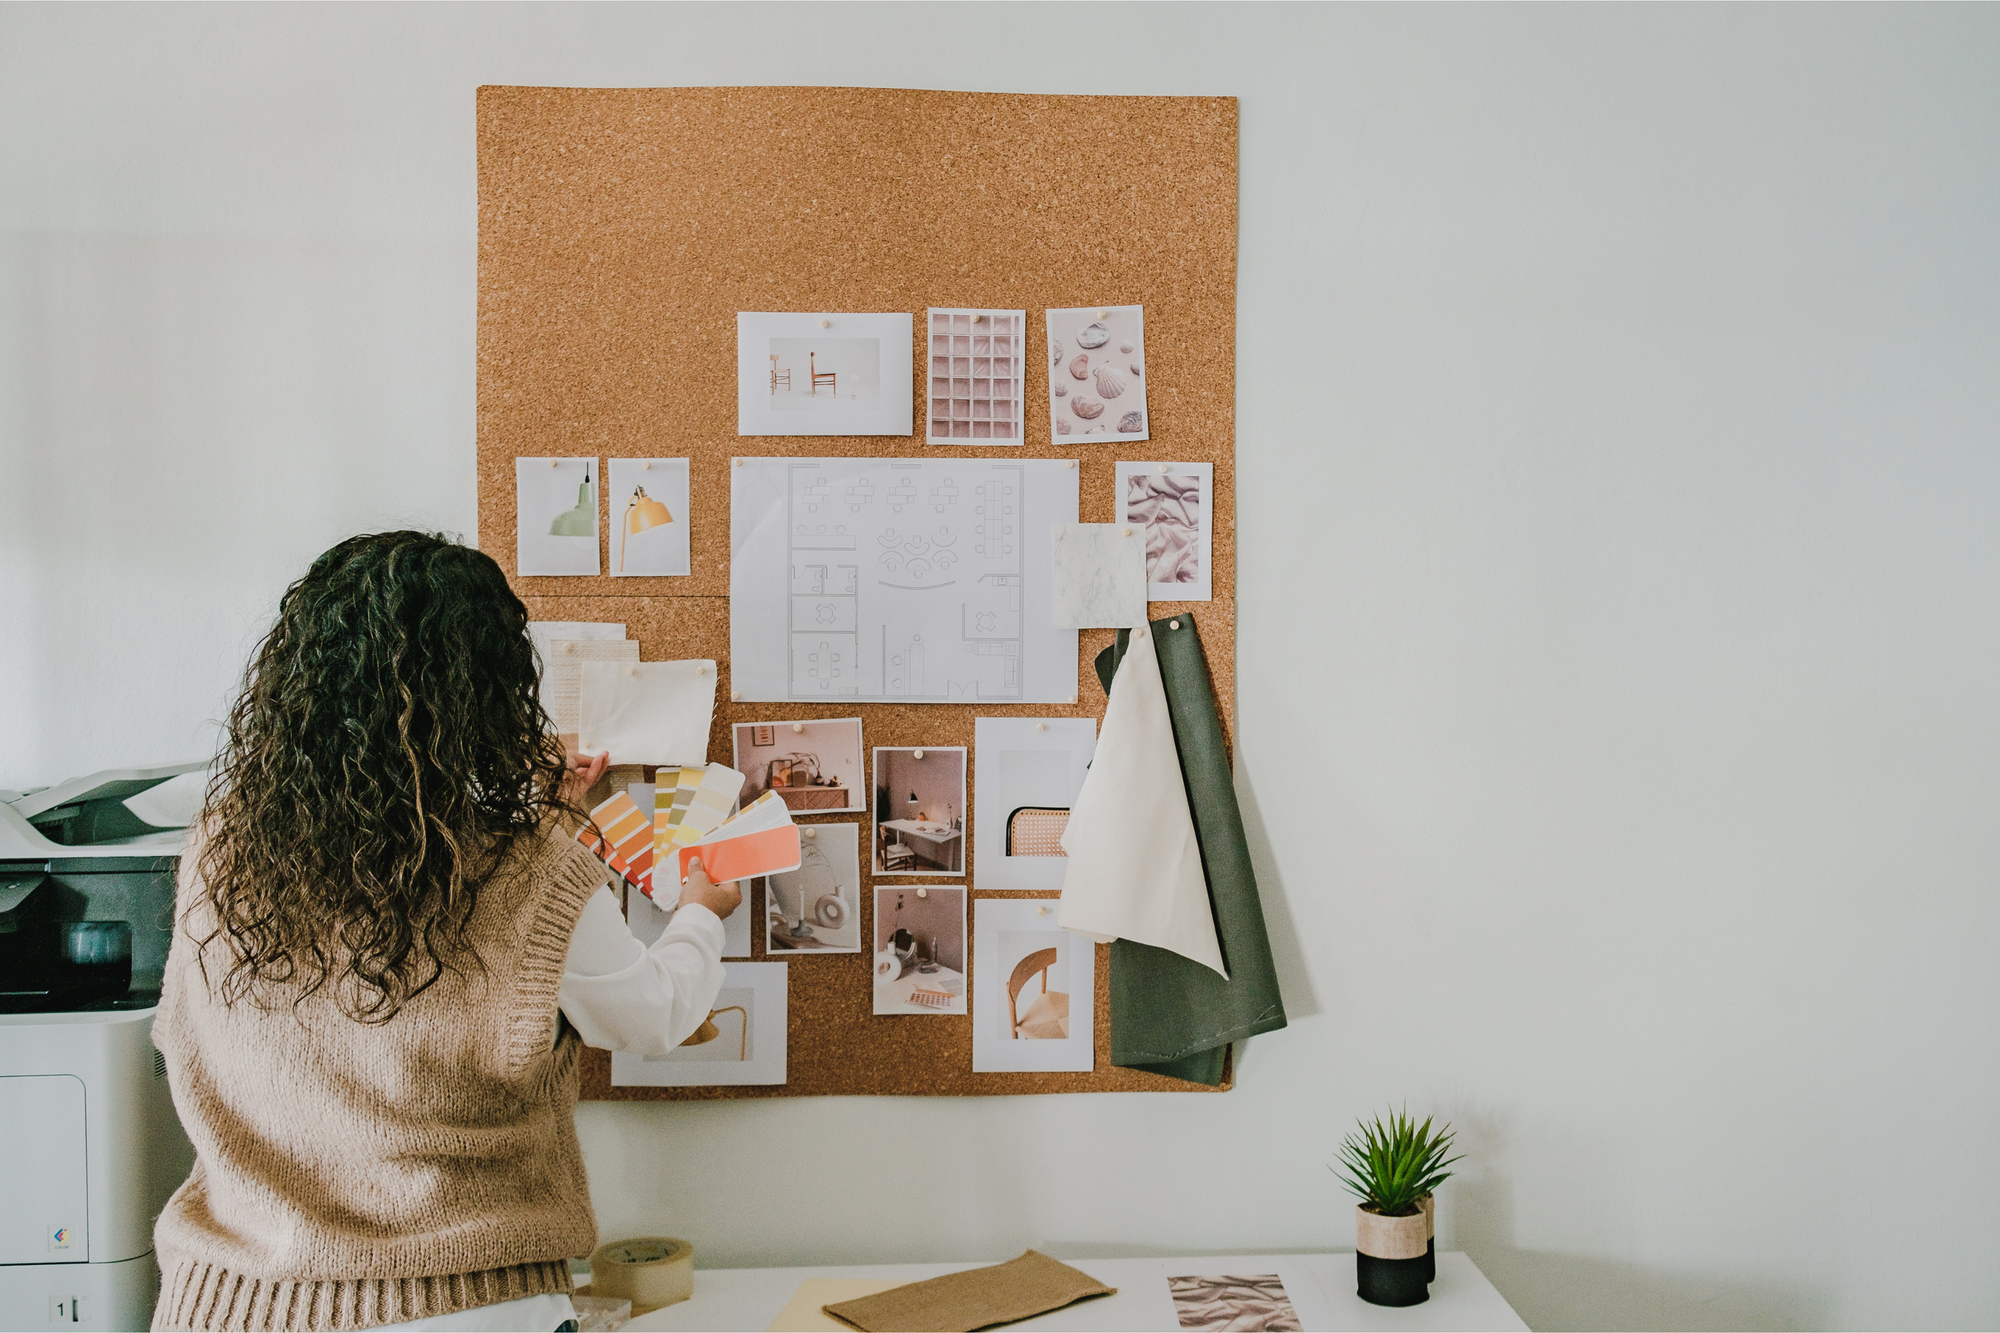 Designer organizing a product inspiration / mood board